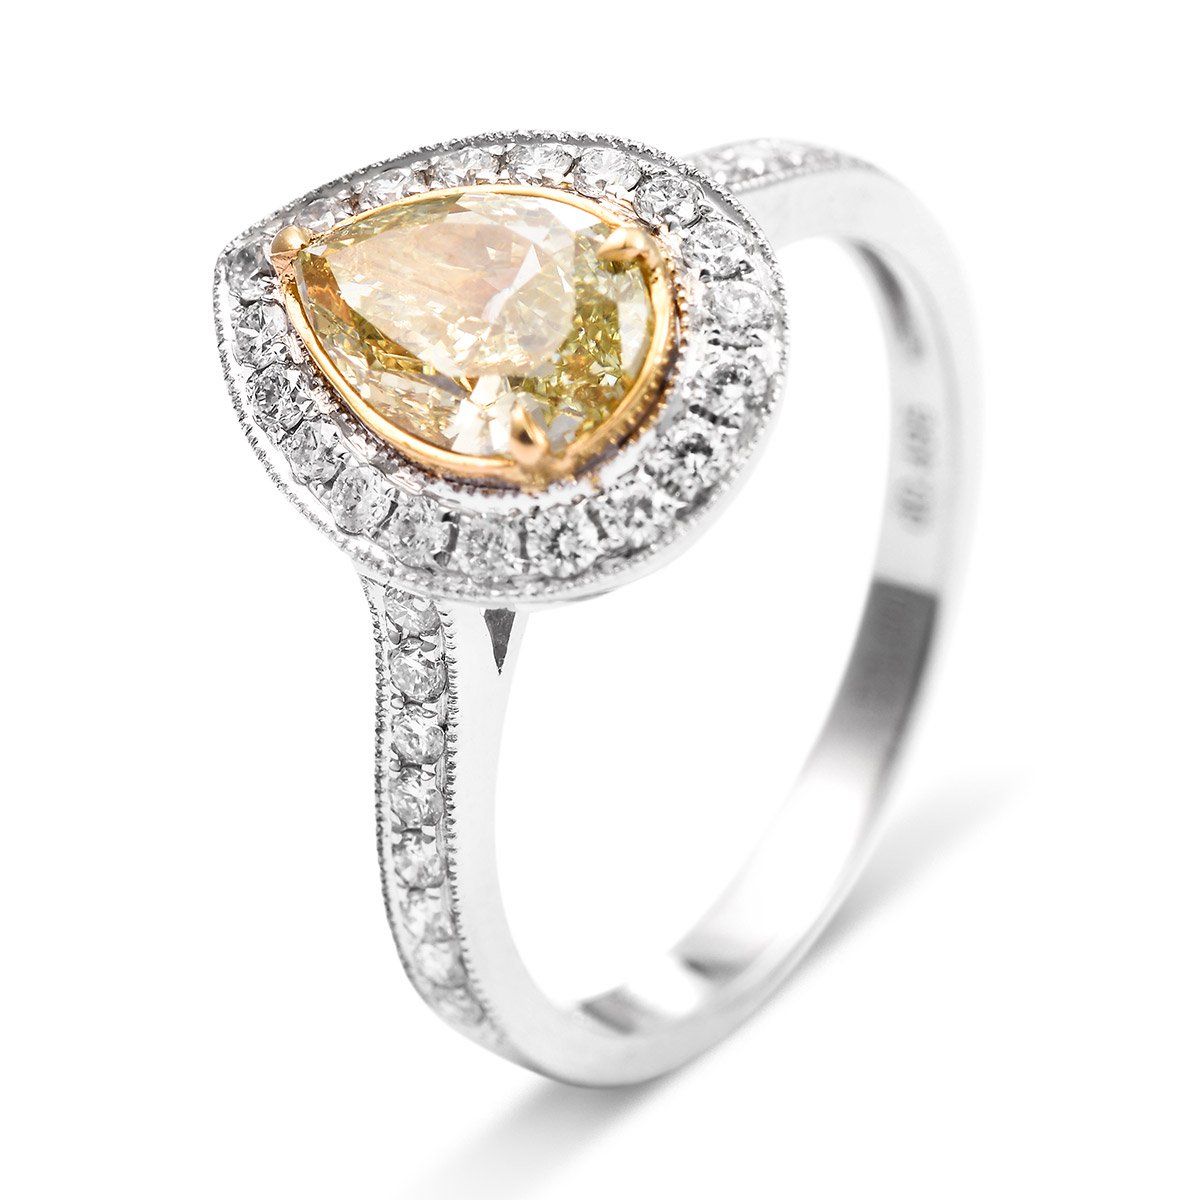 Fancy Greenish Yellow Diamond Ring, 1.50 Ct. TW, Pear shape, GIA Certified, 5151177925